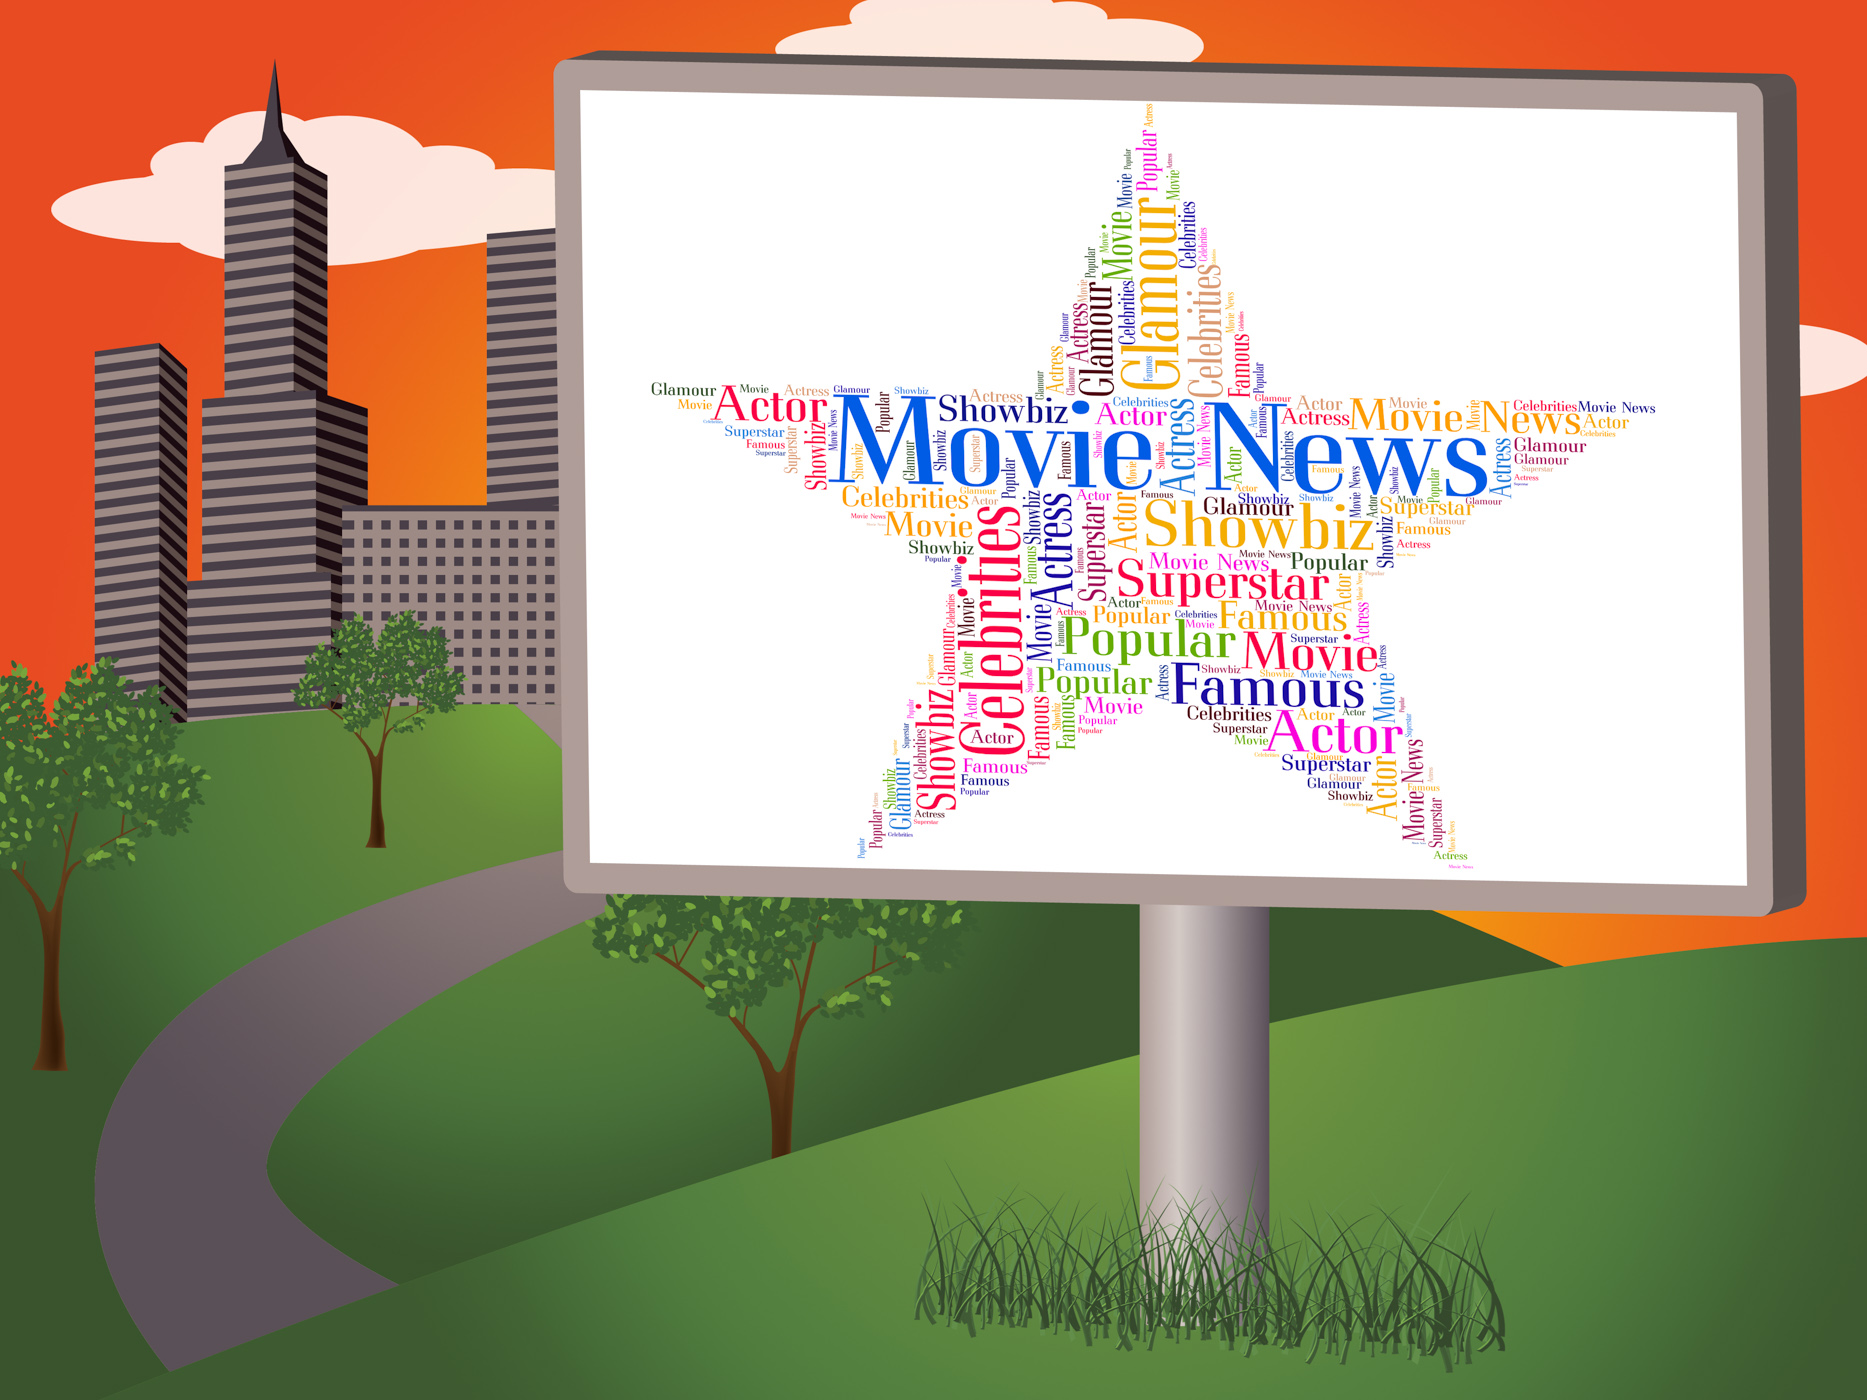 Movie news represents hollywood movies and cinemas photo